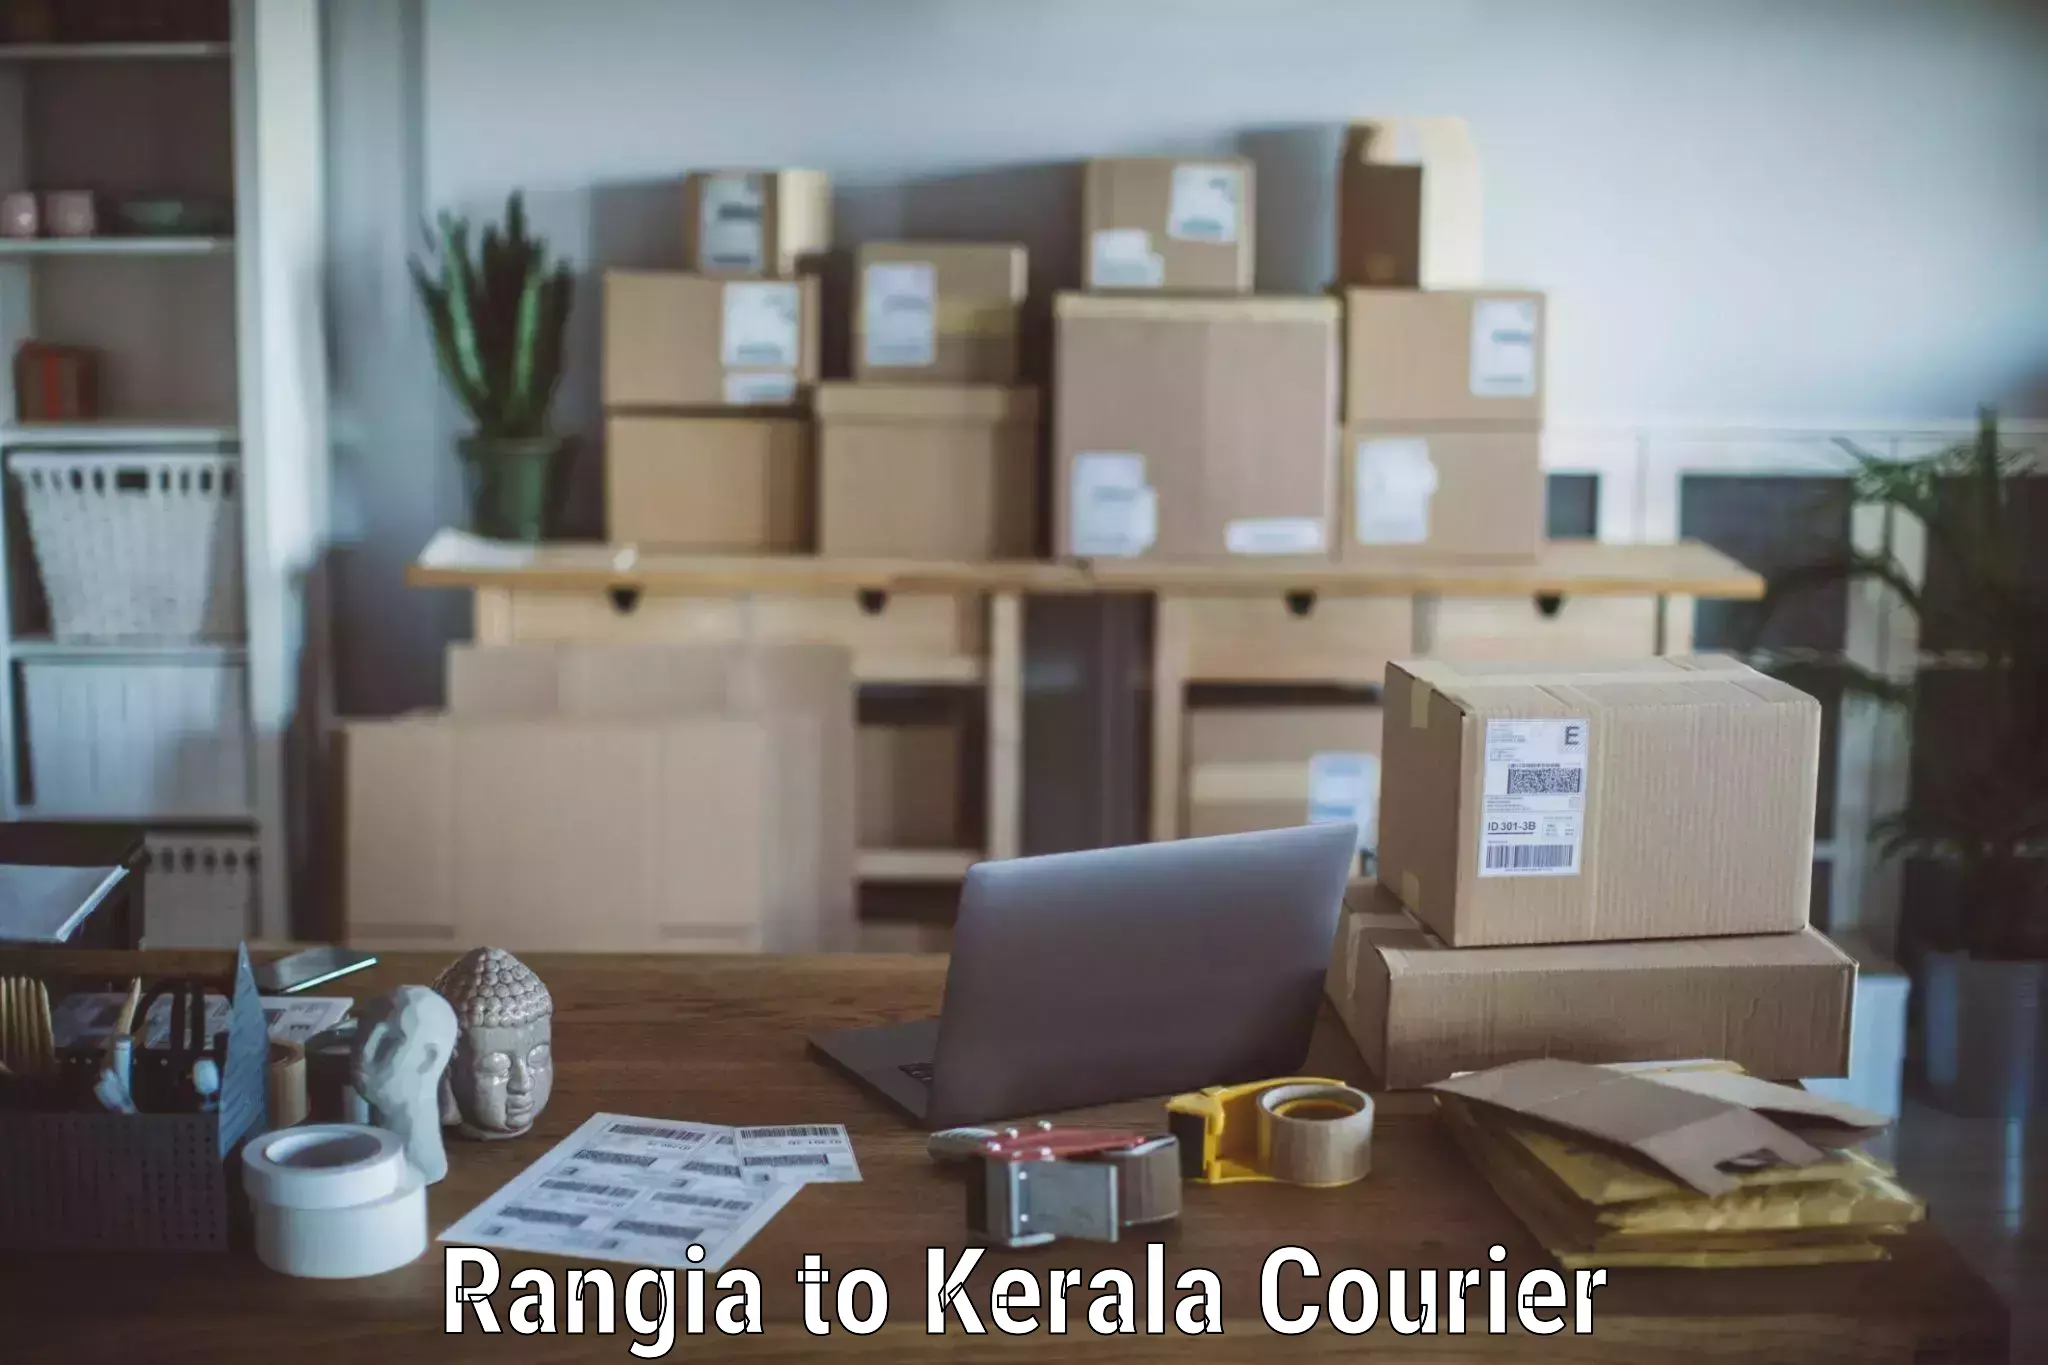 Professional moving company Rangia to Kerala